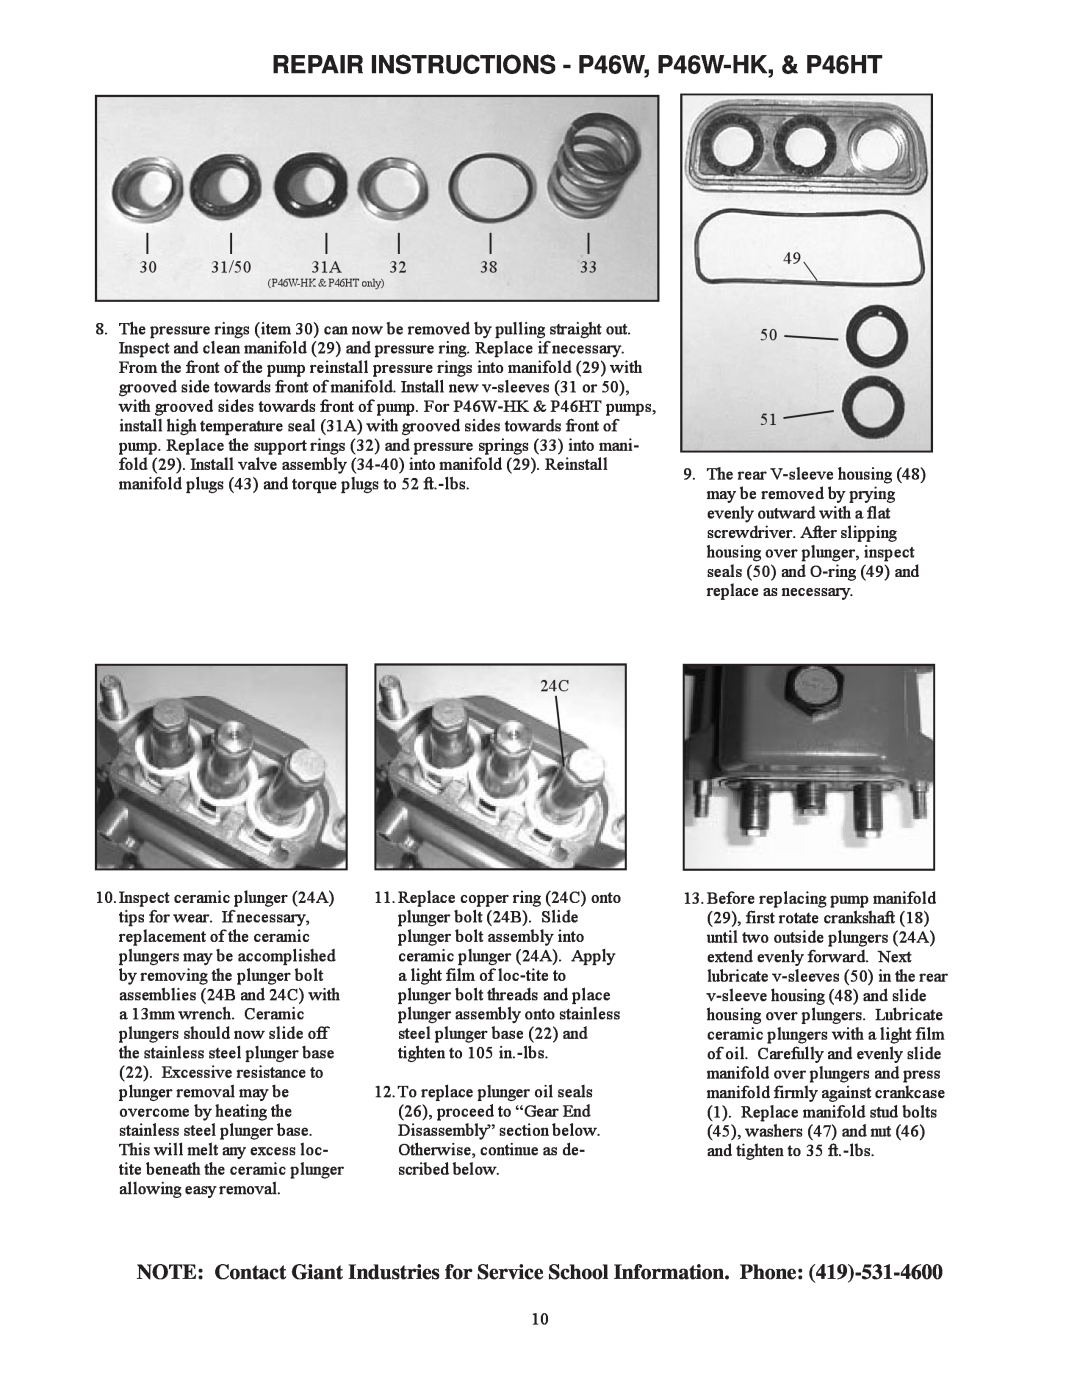 Giant Triplex Ceramic Plunger Pump installation instructions REPAIR INSTRUCTIONS - P46W, P46W-HK,& P46HT 